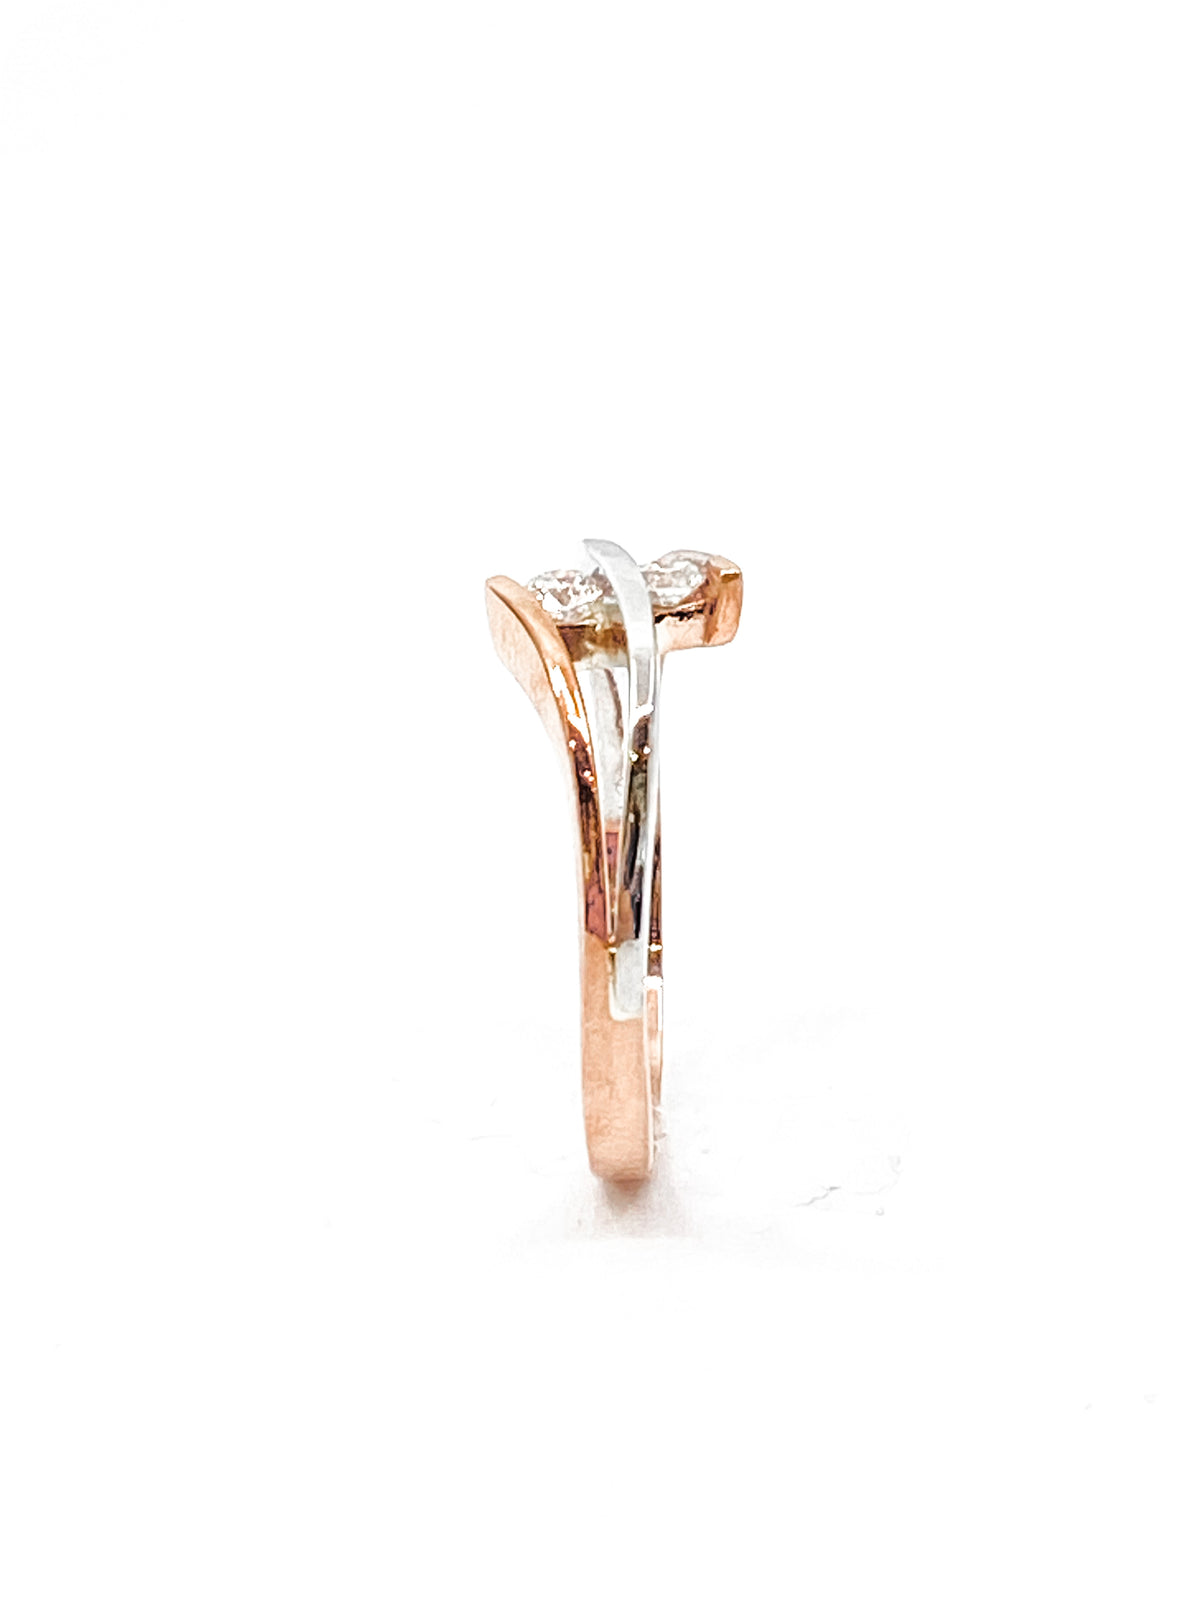 10K White &amp; Rose Gold 0.17cttw Canadian Diamond Ring, size 6.5